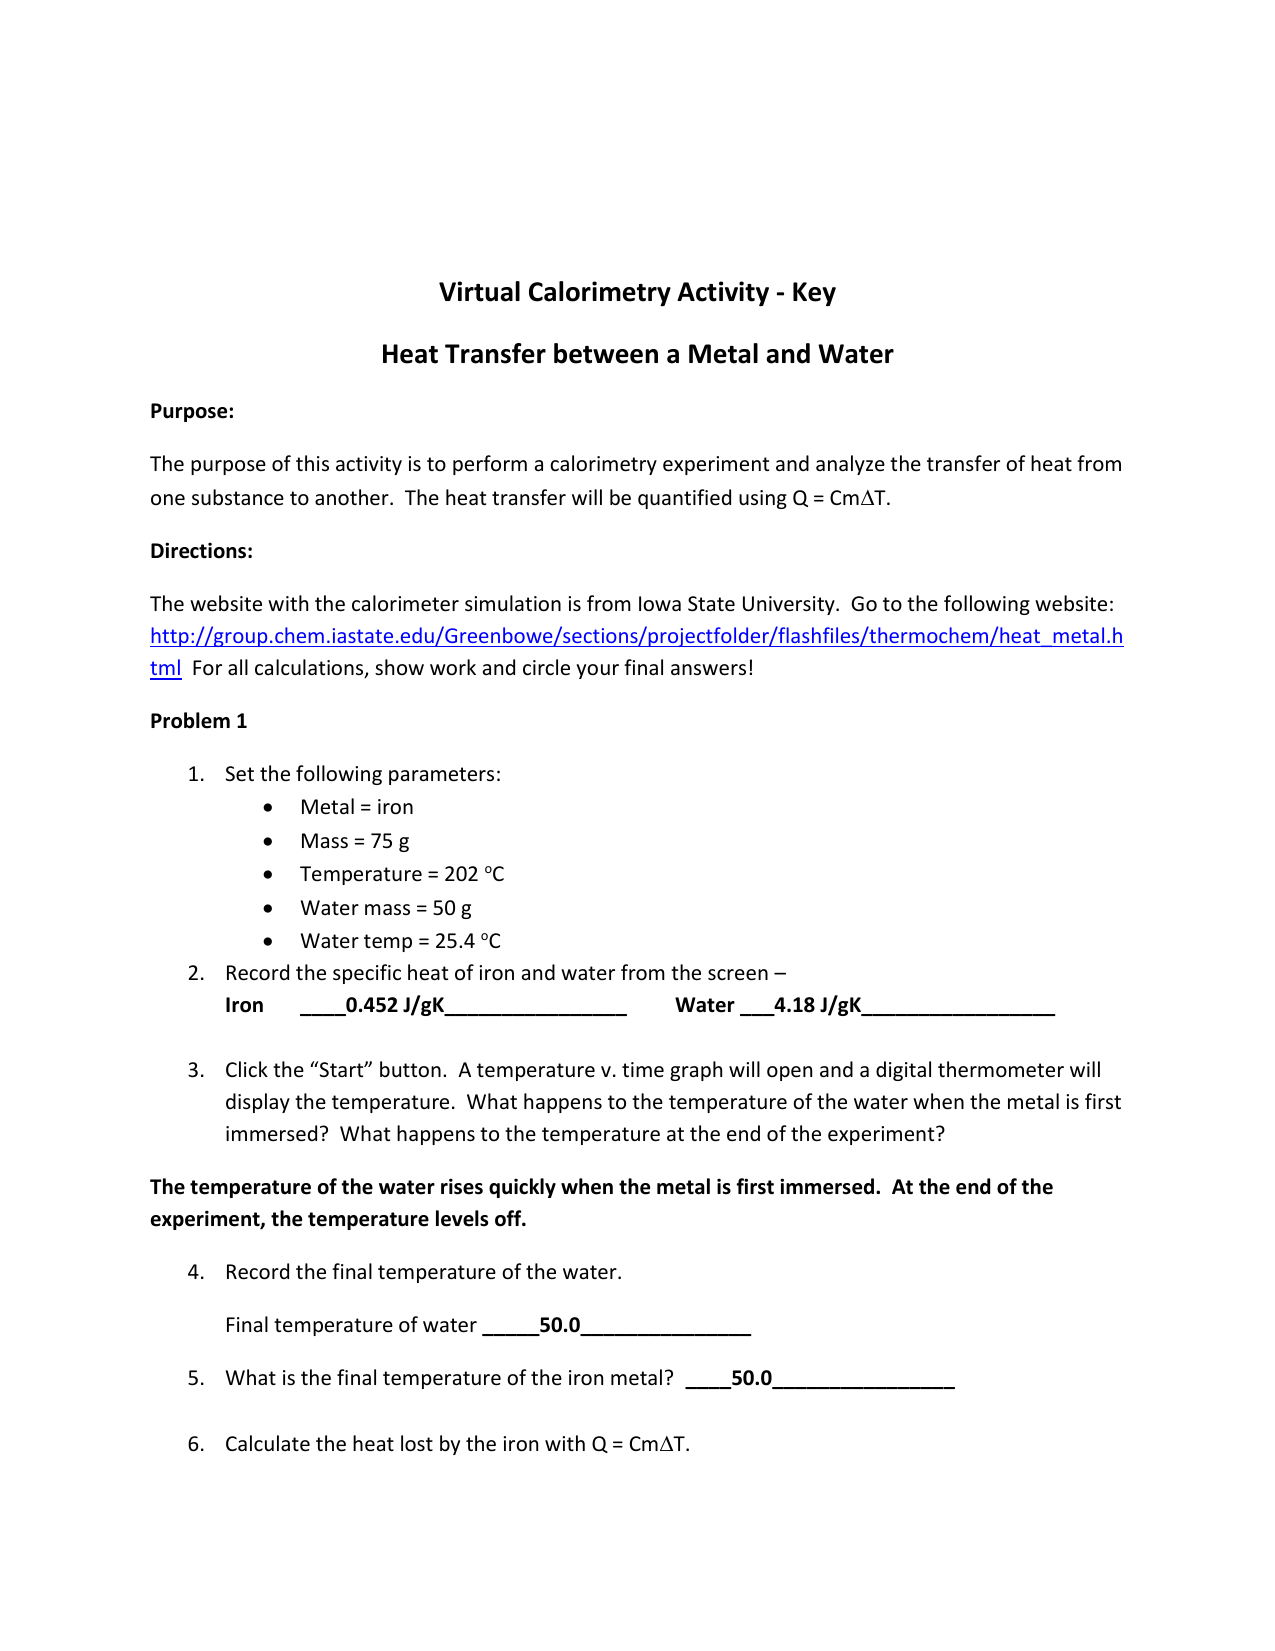 Calorimetry Worksheet Answer Key